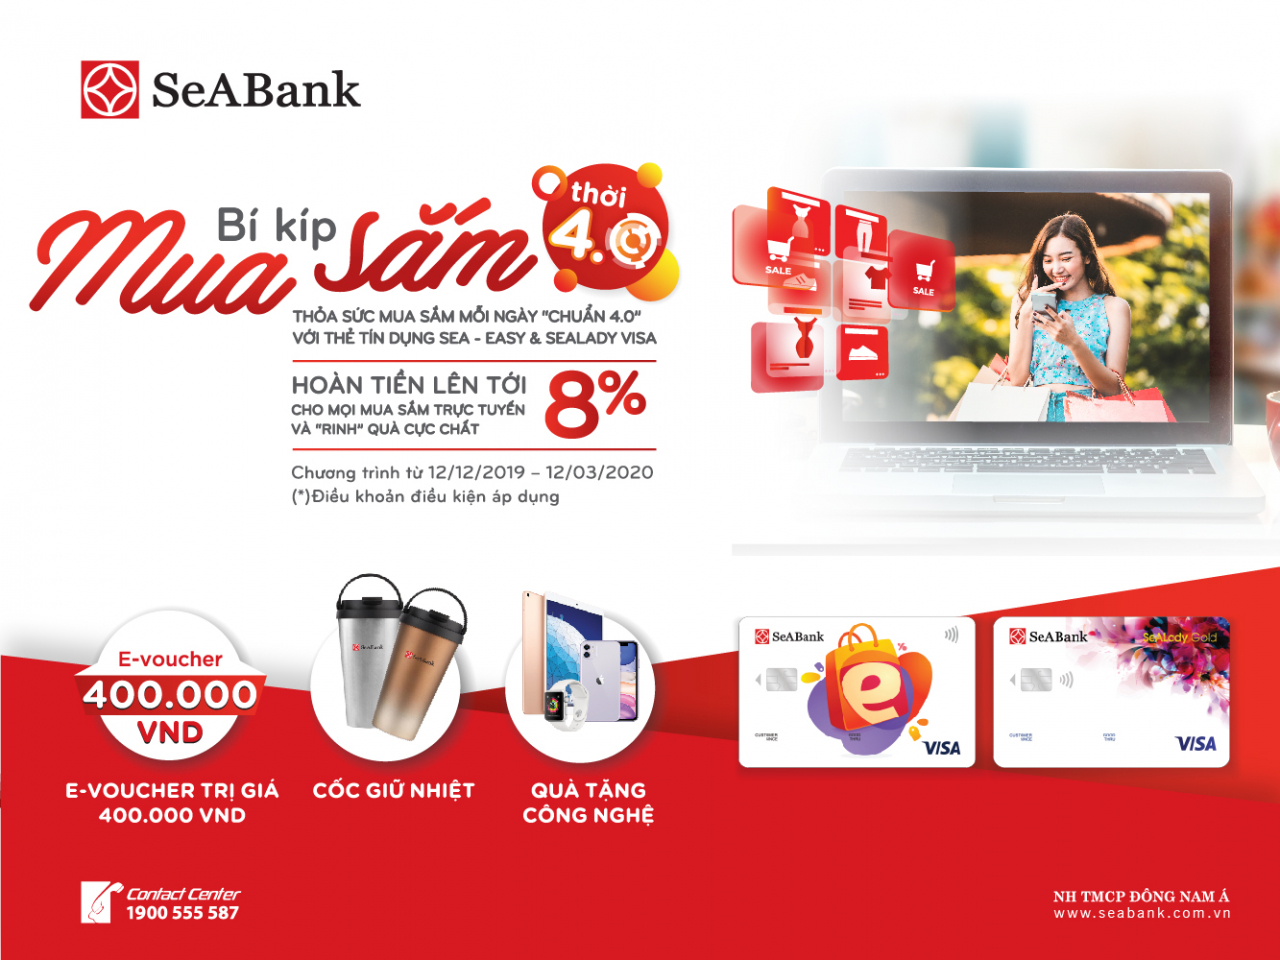 seabank-tang-iphone-11-cho-khach-hang-mo-moi-the-sea-easy-va-sealady-visa